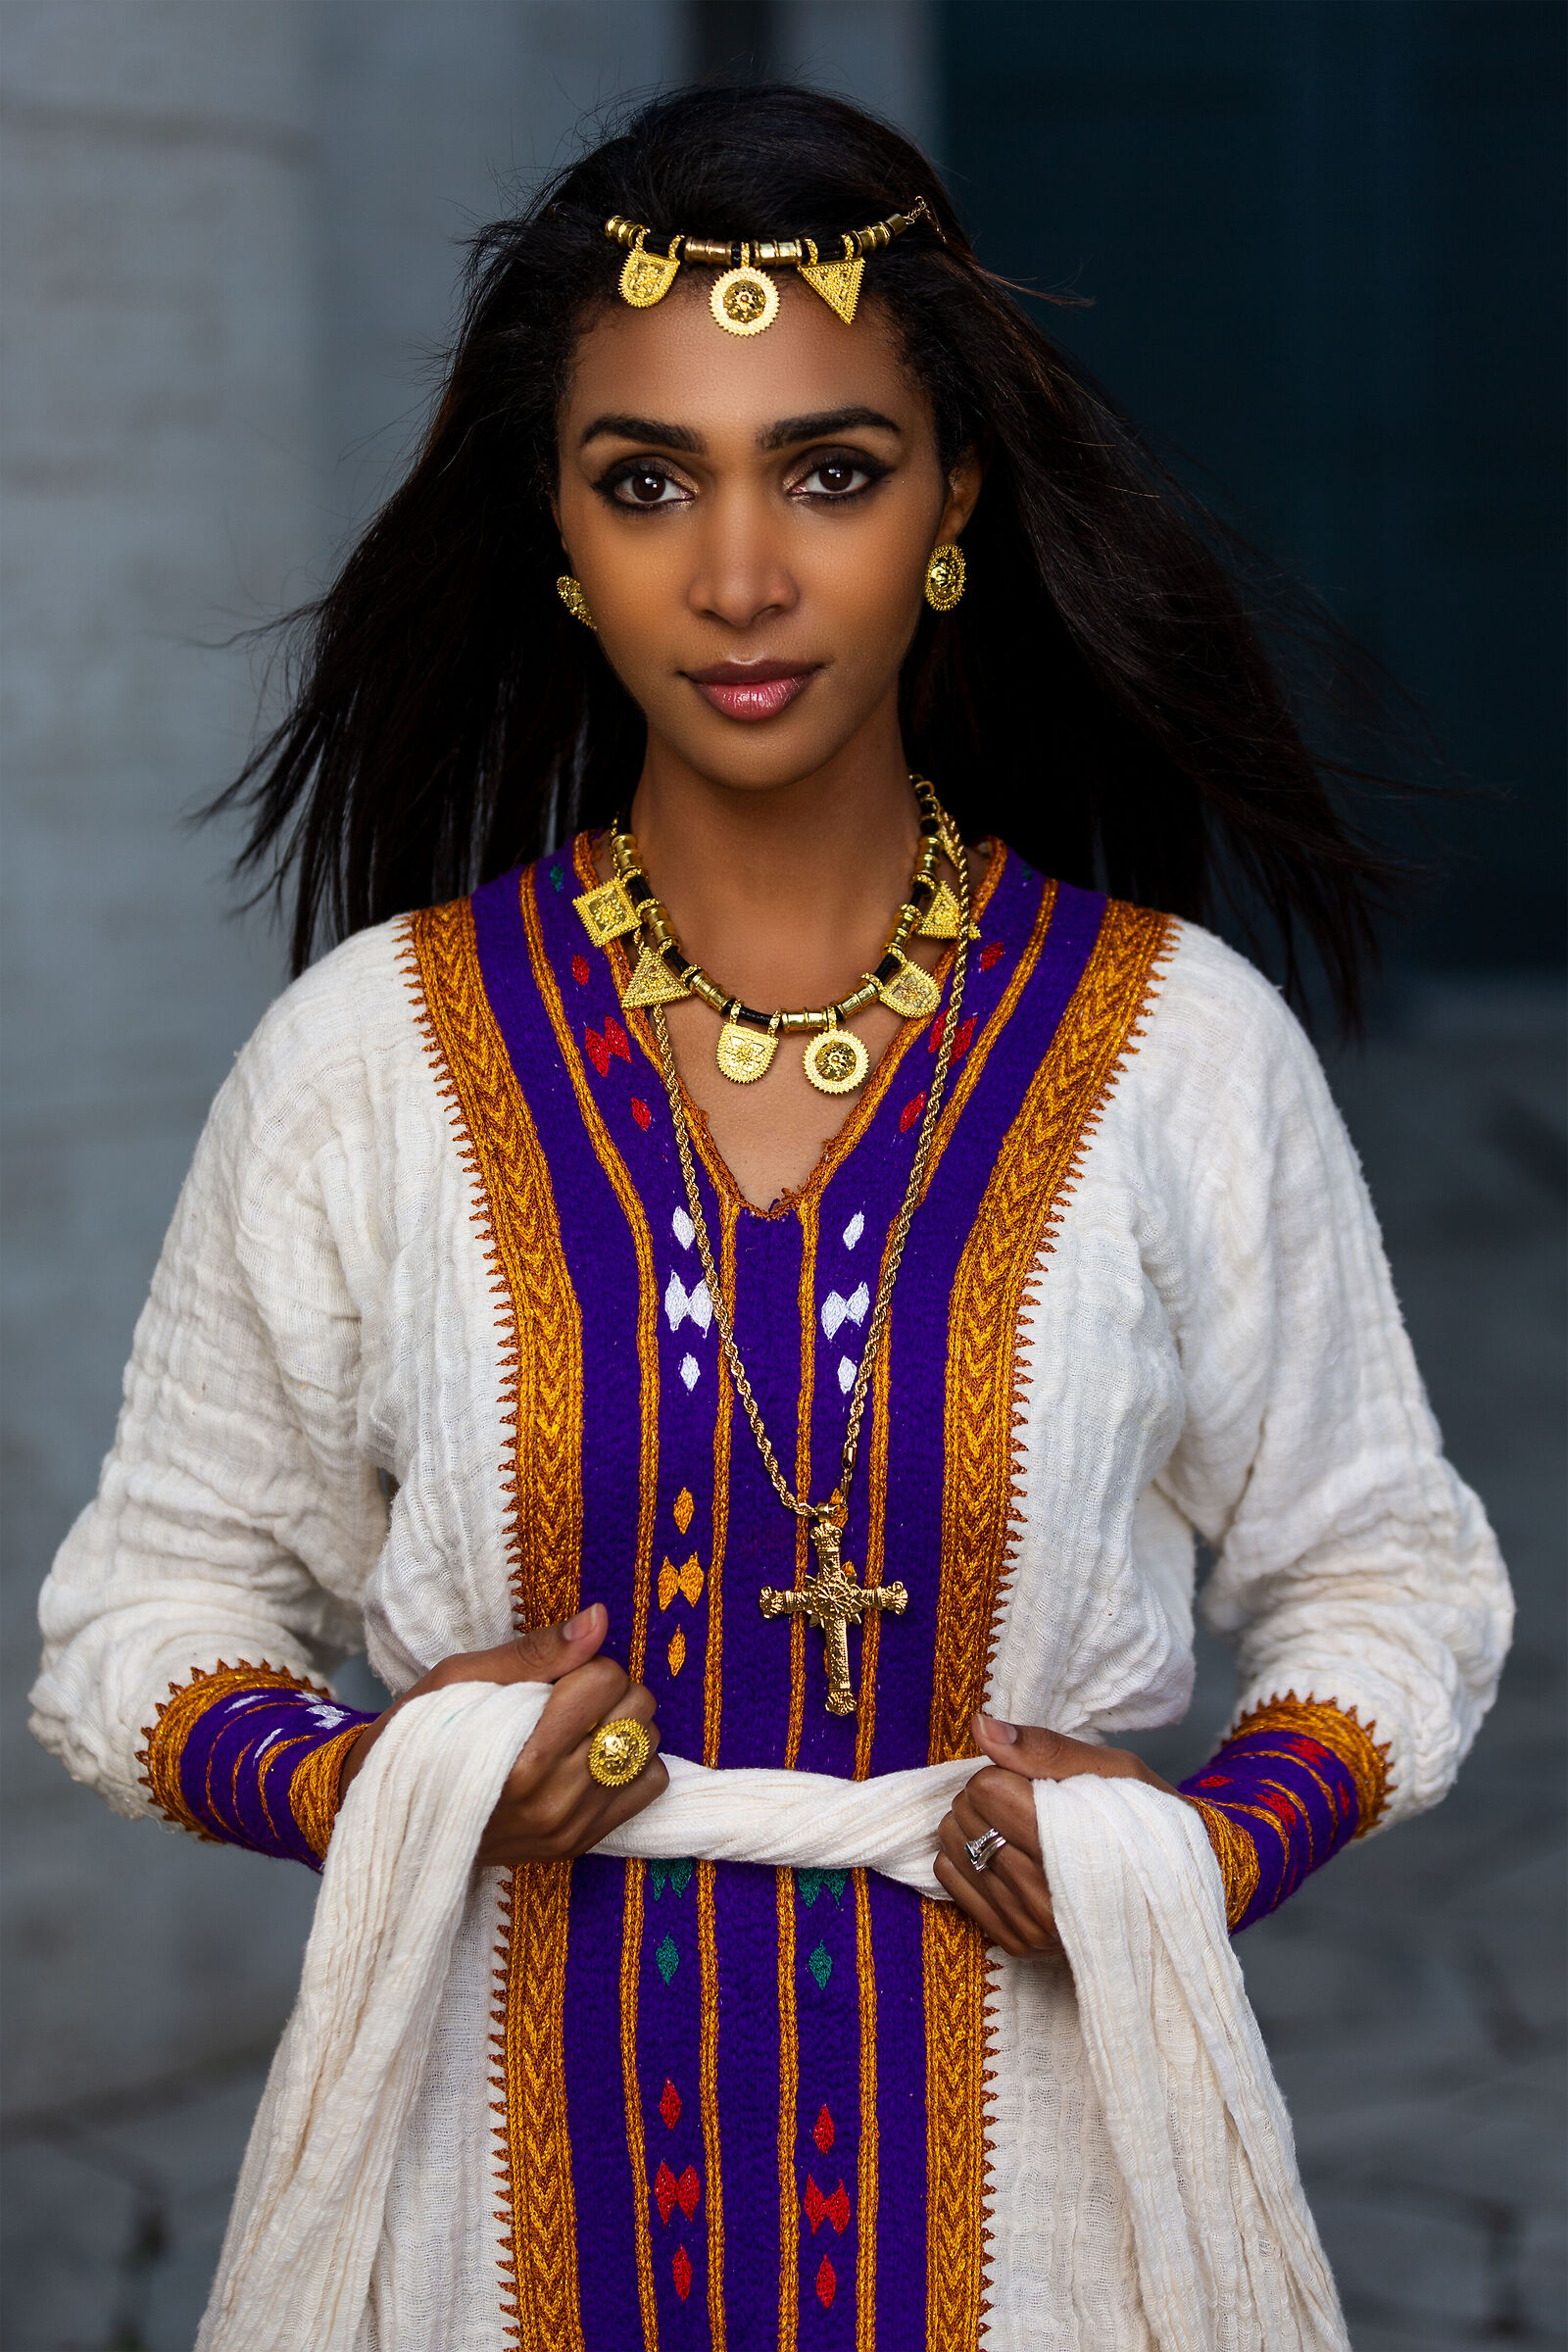 Eritrean beauty...